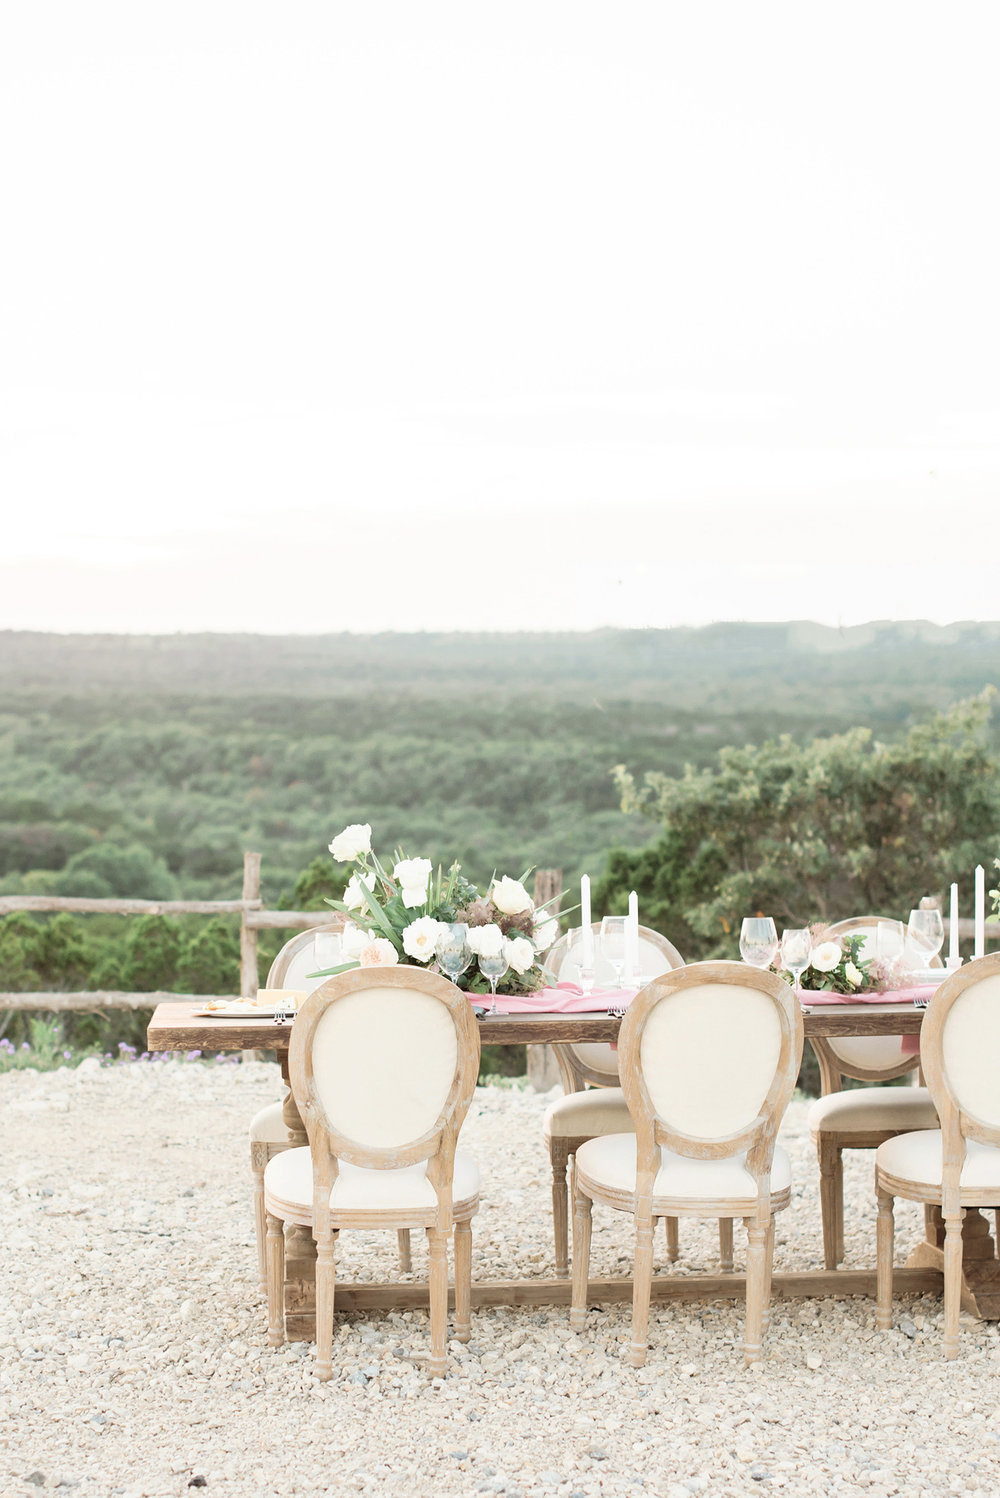 Whimsical Summer Vineyard Wedding Inspiration - Olive Grove Design - 00179.jpg